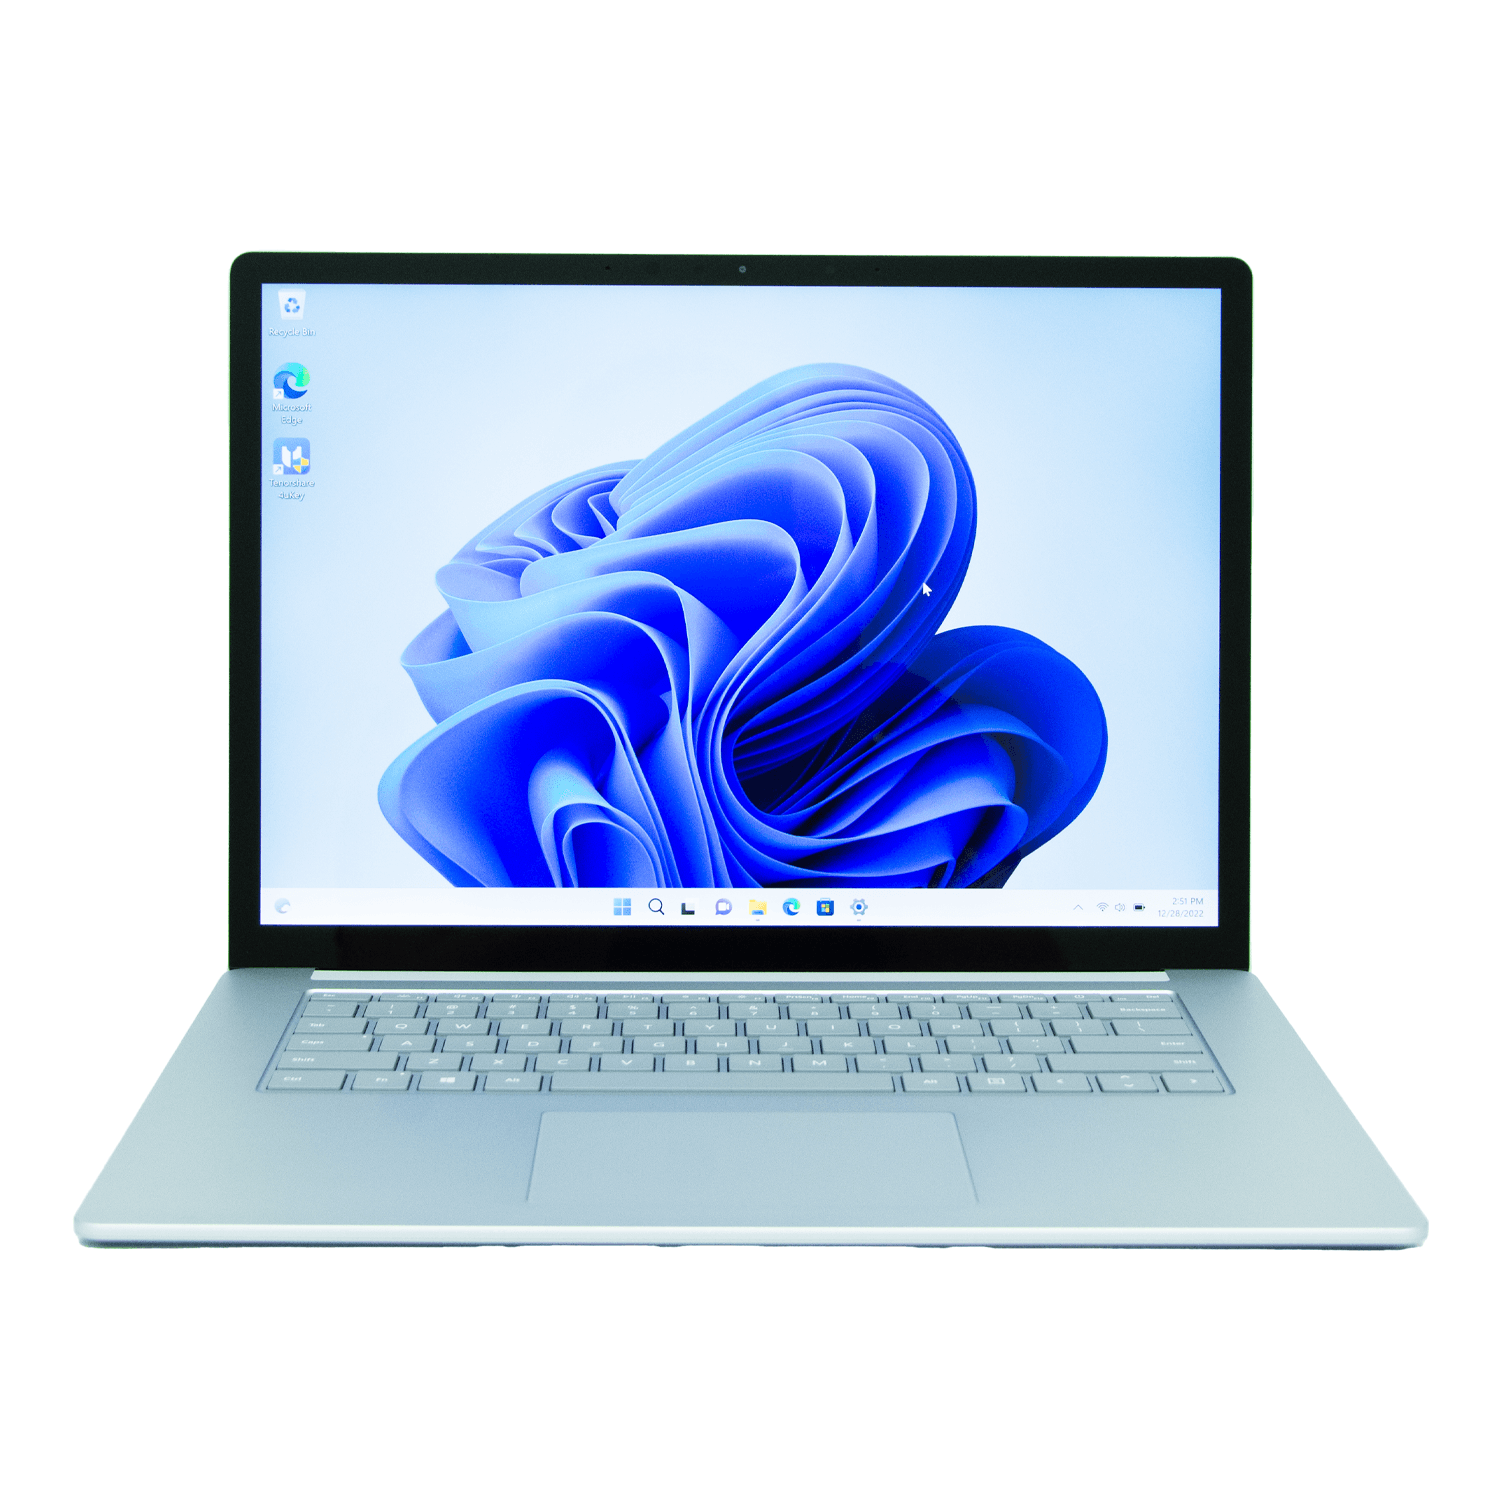 Microsoft Surface Laptop 1979 15" i7-1186G7, 16 GB Ram, 500 GB SSD - Plata - ipawnishop.com